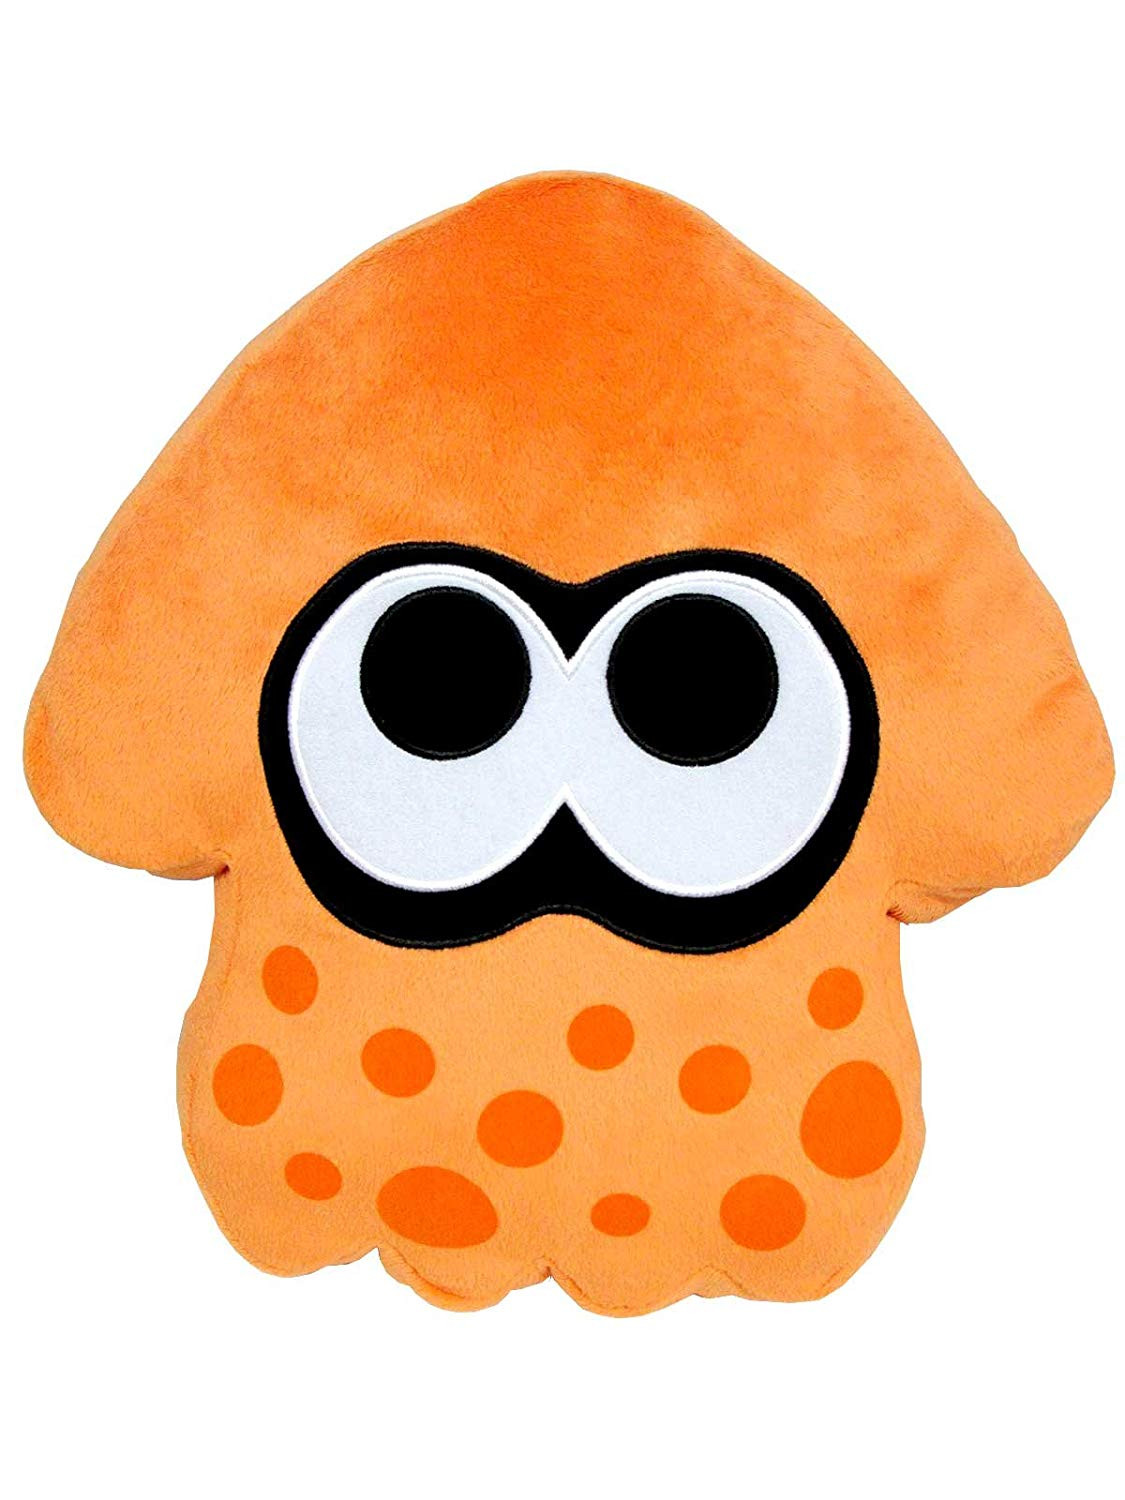 Little Buddy 1667 Splatoon 2 Series - Sun Orange Squid Cushion Plush Plush Toys